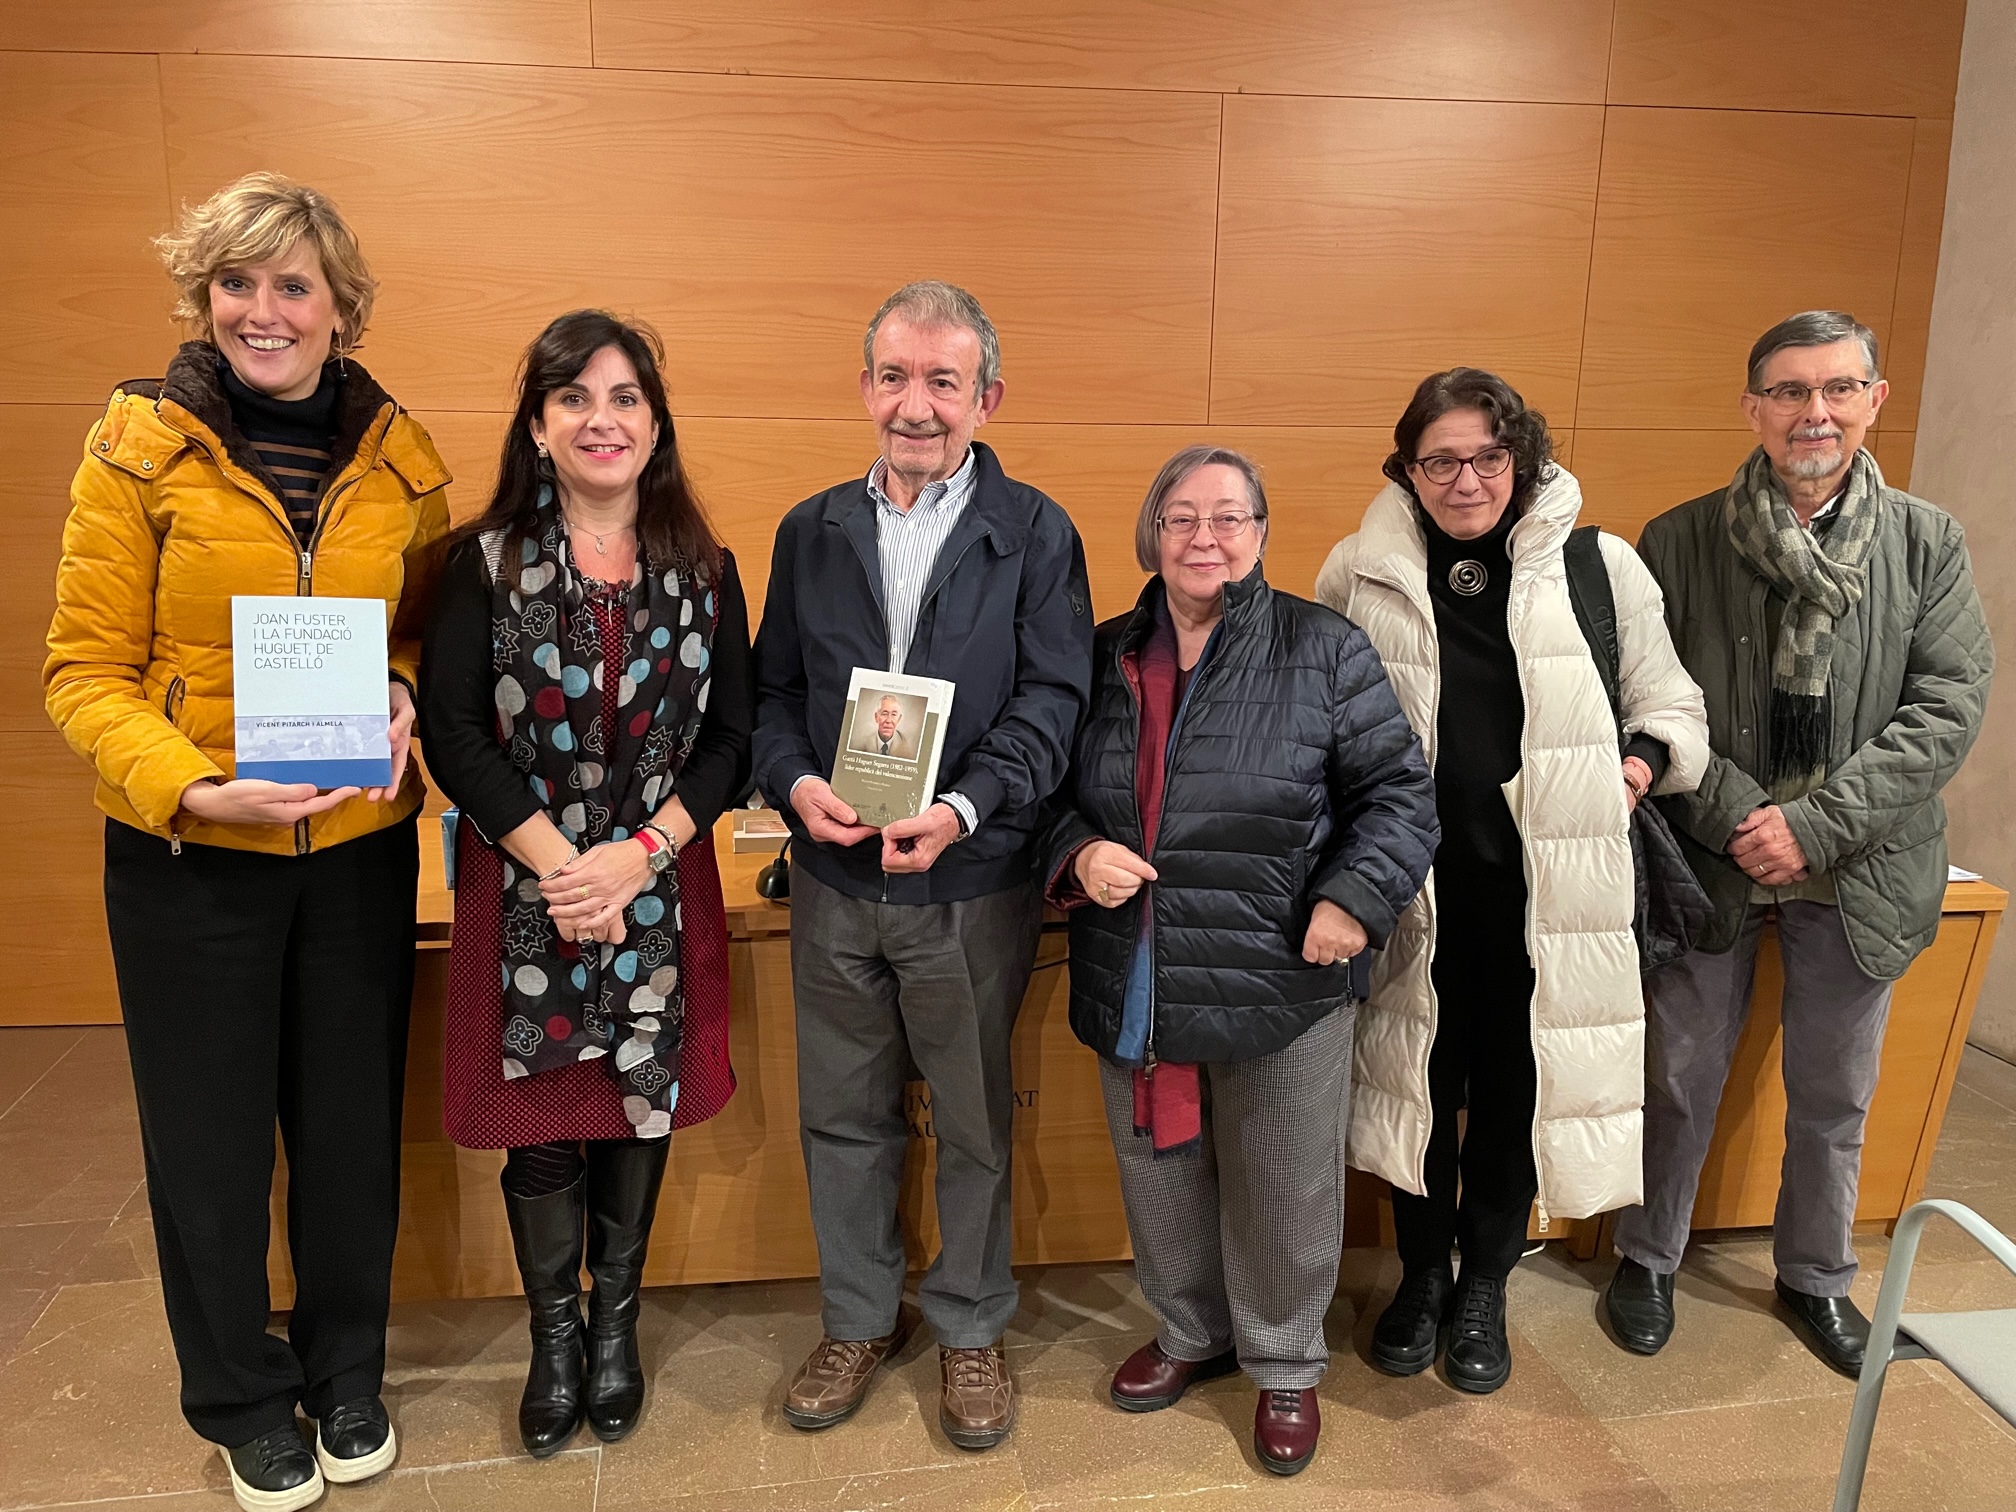 Concejalía y UJI presentan los libros 'Joan Fuster i la Fundació Huguet' y 'Gaetà Huguet Segarra, líder republicà del valencianisme', de Vicent Pitarch